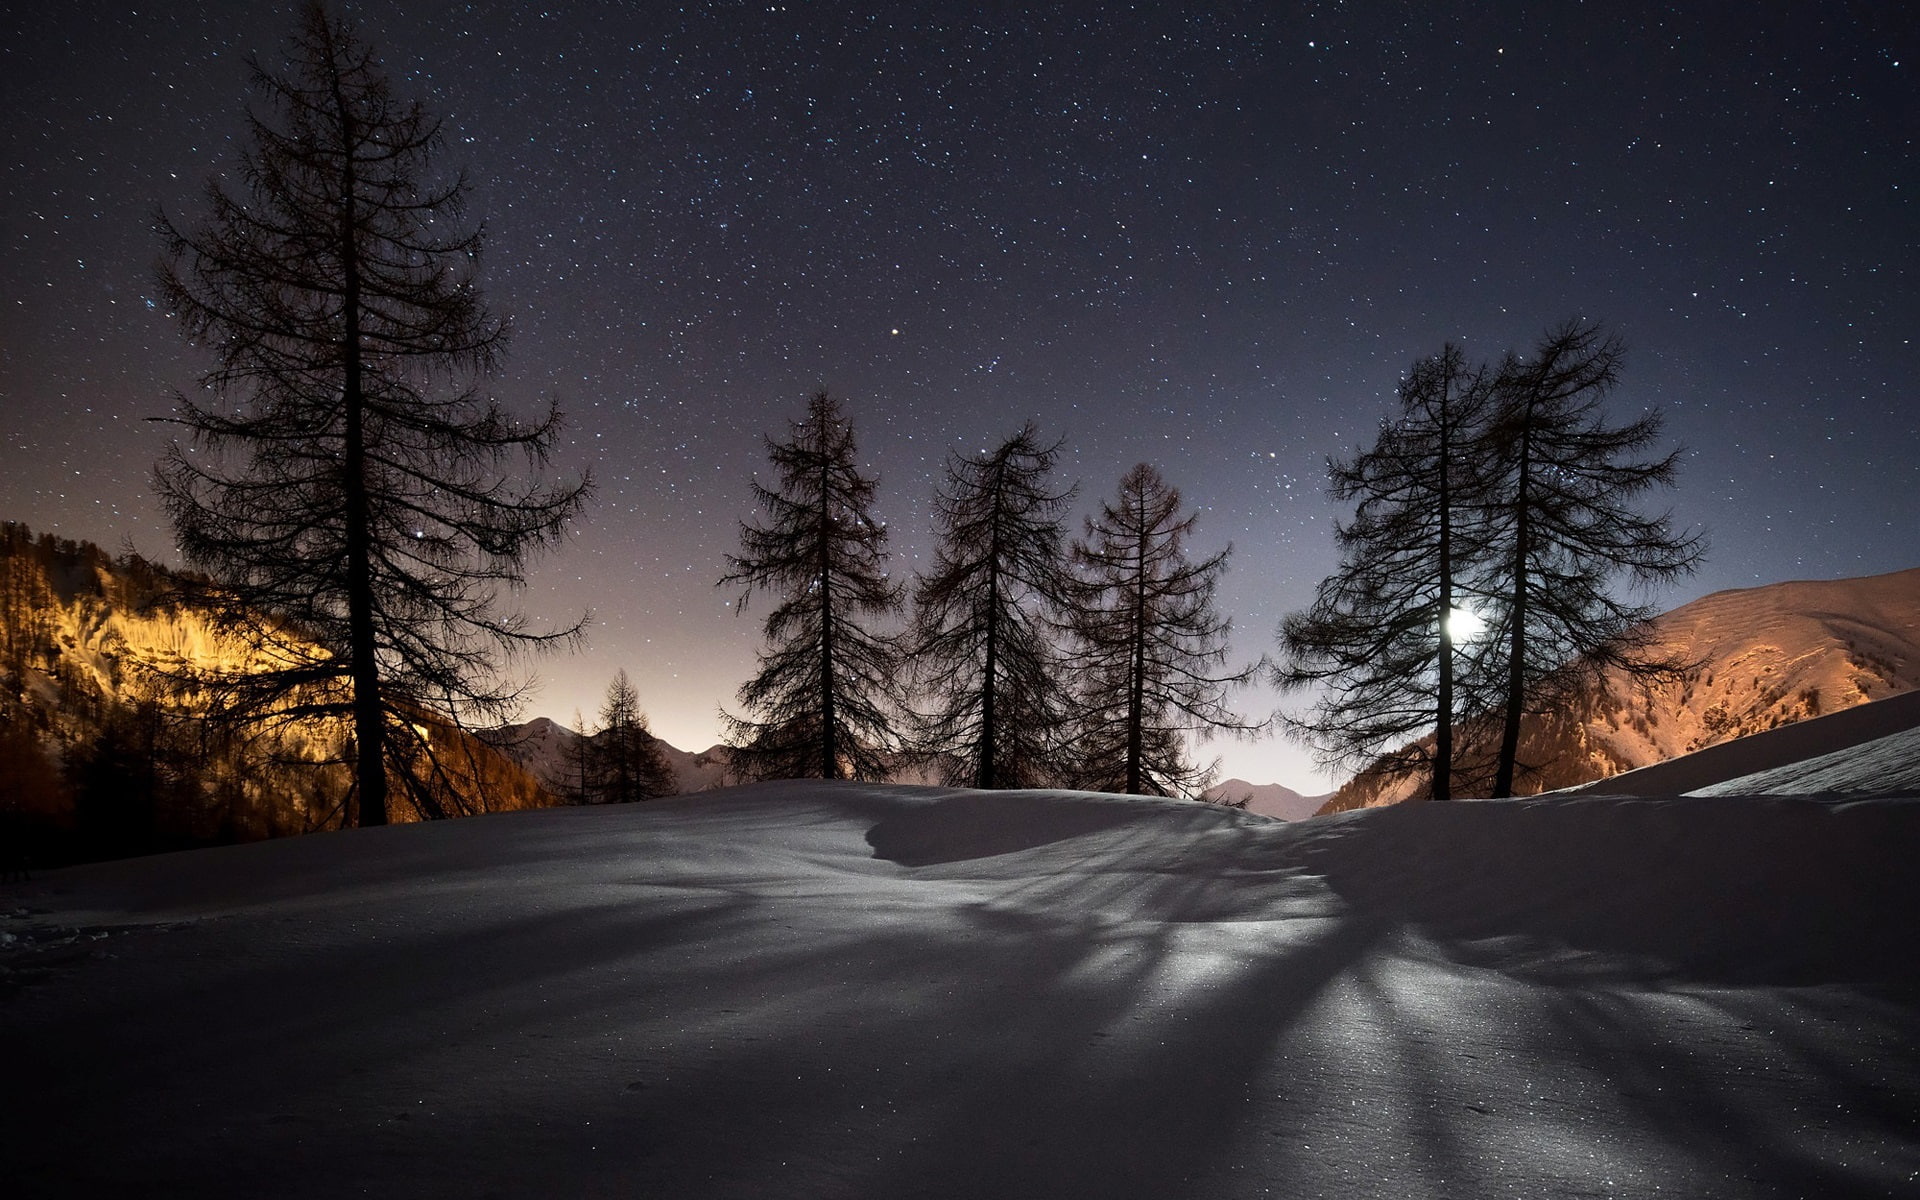 Night, winter, snow, mountains, trees, stars, nature landscape